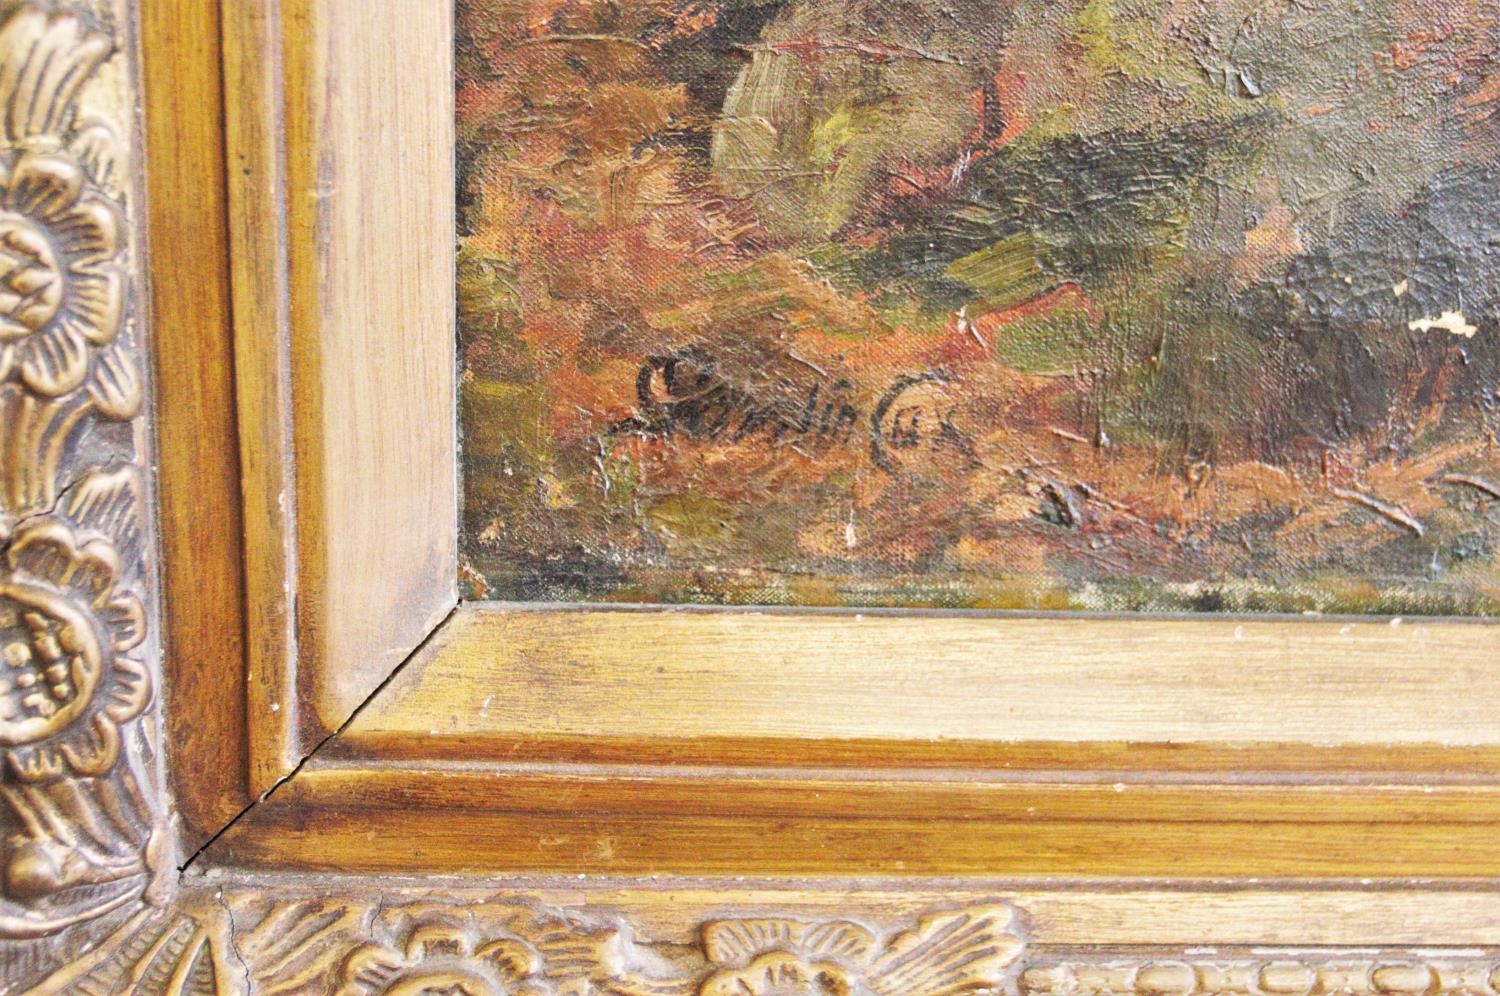 Garstin Cox (1892-1933), Oil on canvas, 'The Torrent, 1913, Devonshire', 126.5cm x 101cm, Signed - Image 3 of 3